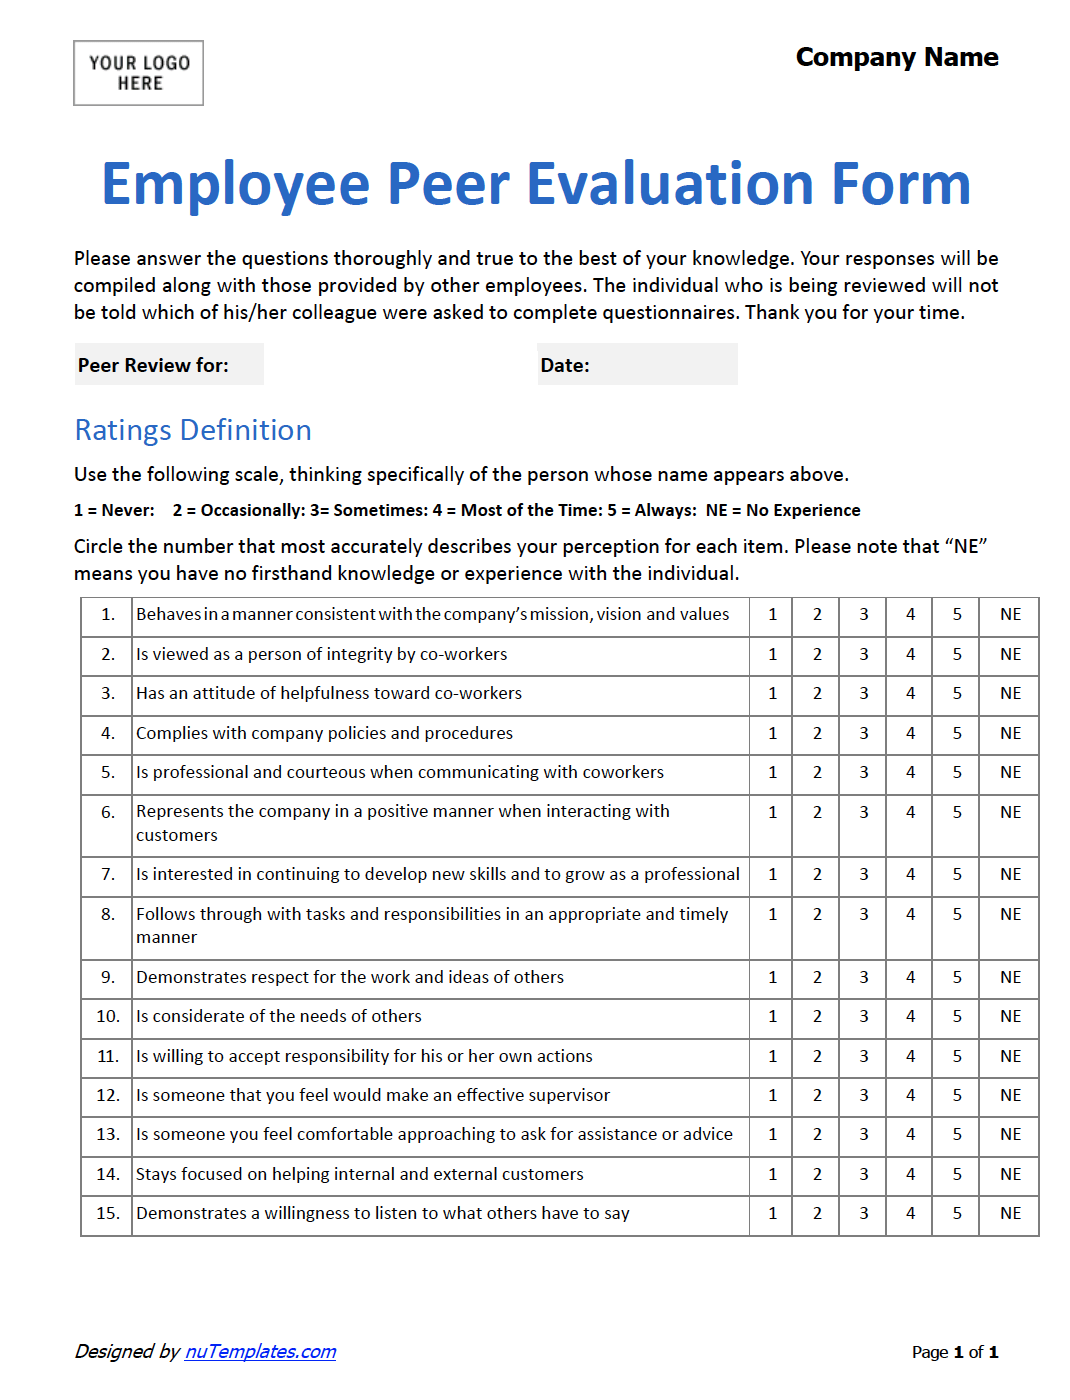 Employee Peer Evaluation Form Peer Evaluation Template 